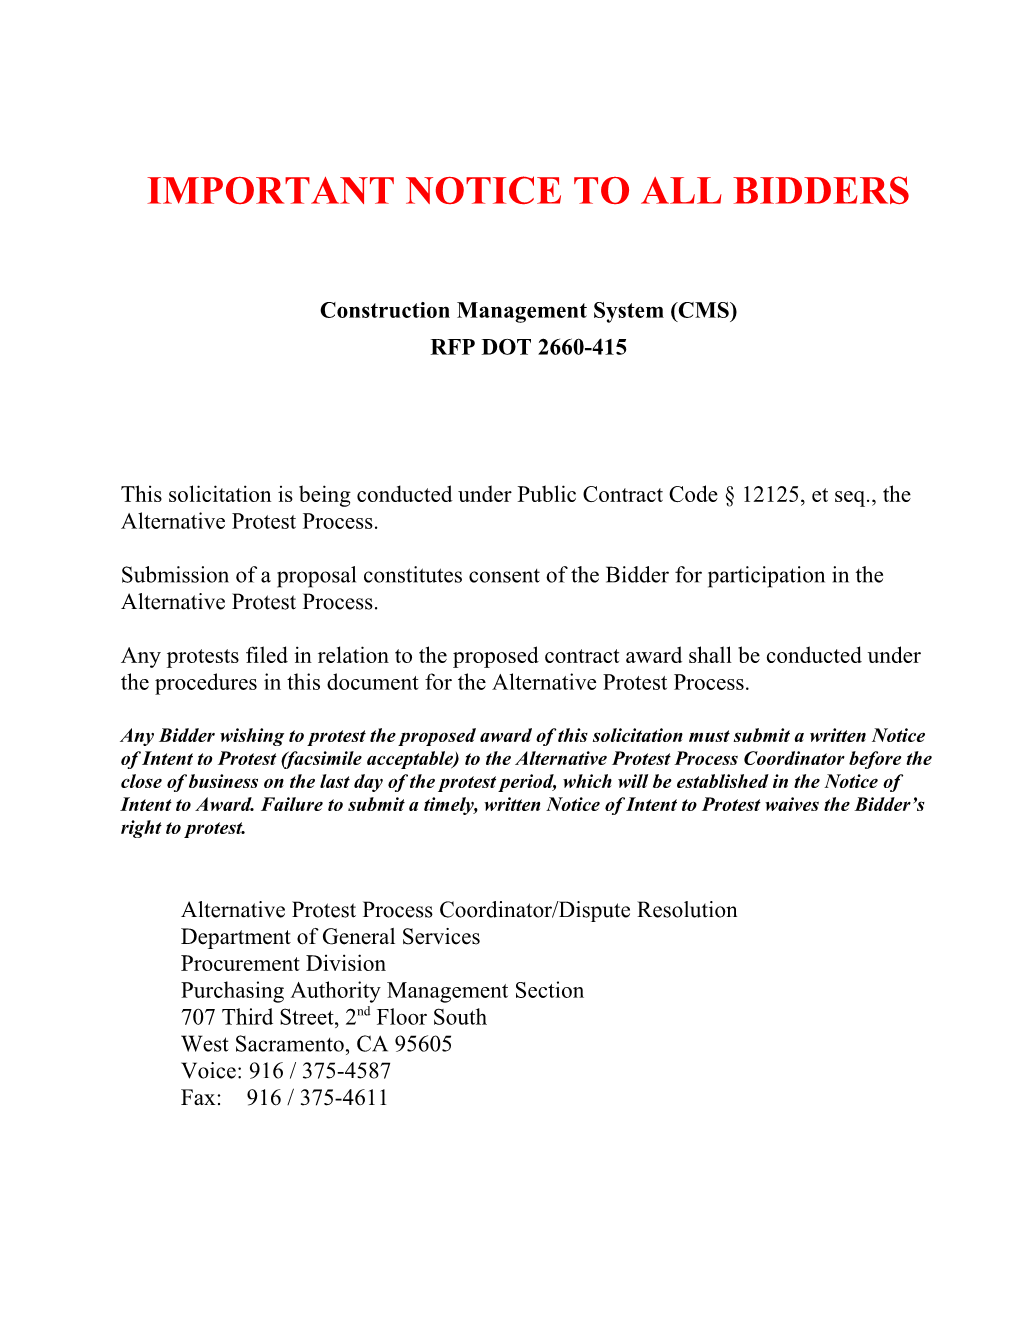 Caltrans CMS Request for Proposal